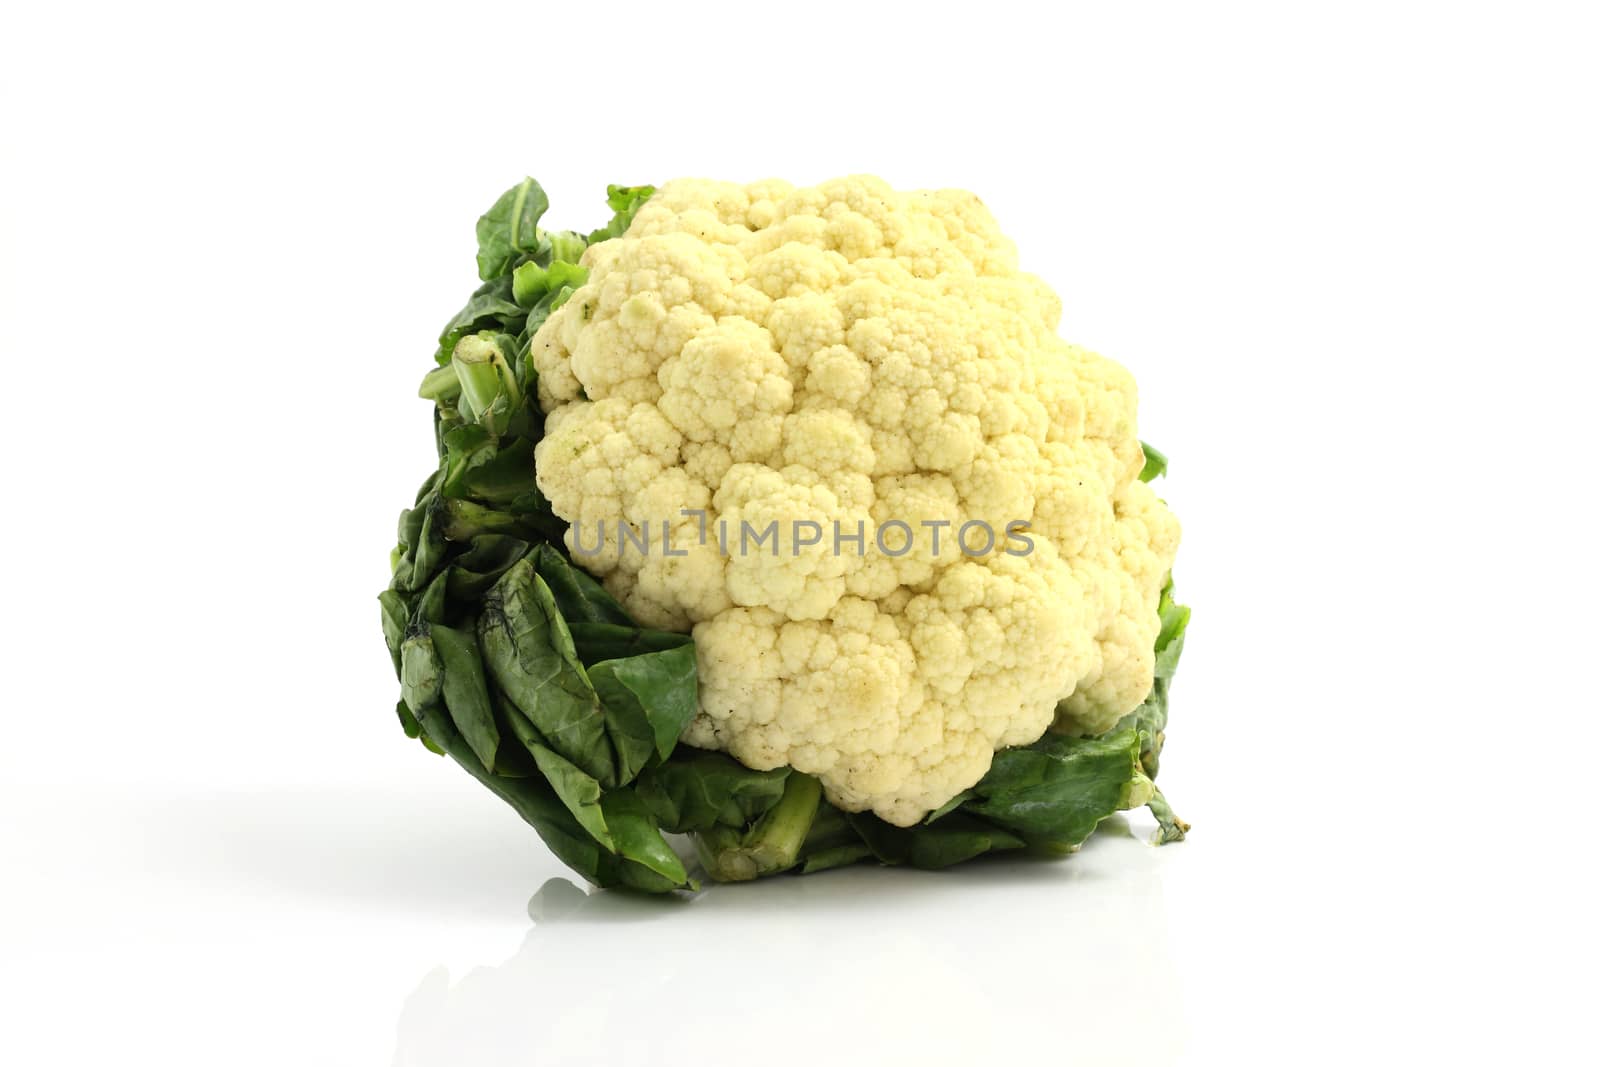 Cauliflower isolated in white background by piyato